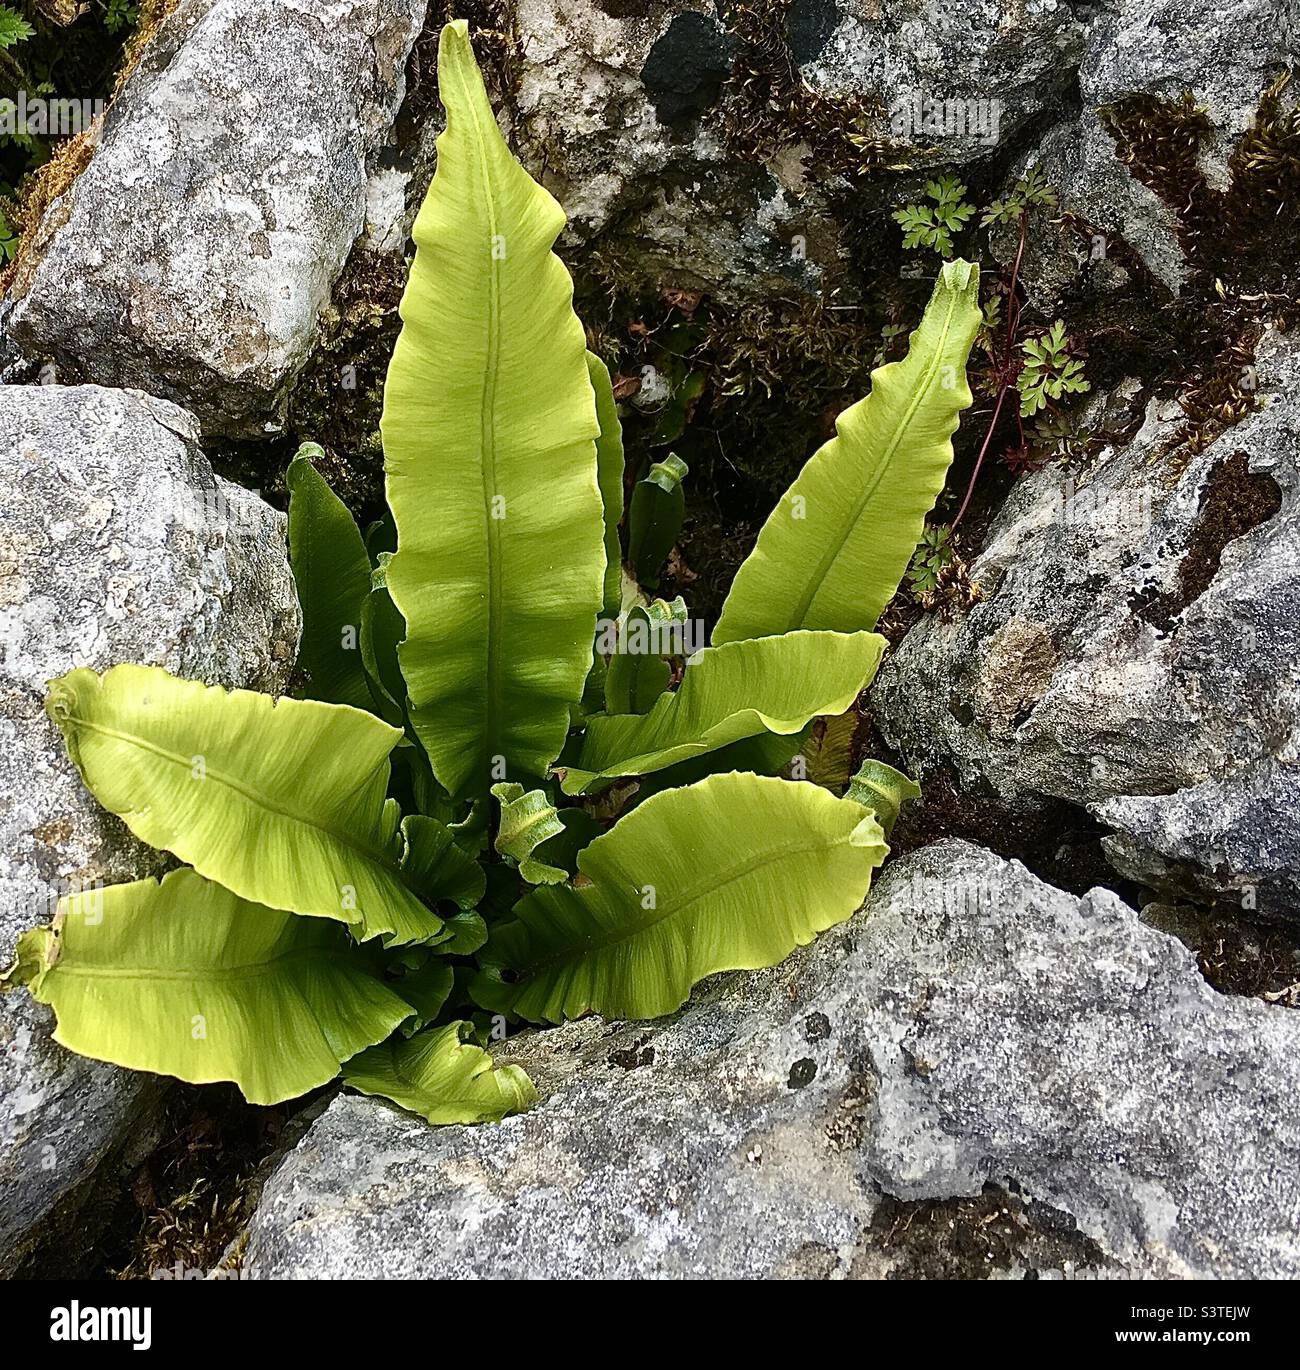 La lingua di HART Fern cresce e prospera in un marciapiede di pietra calcarea Gryke. Foto Stock